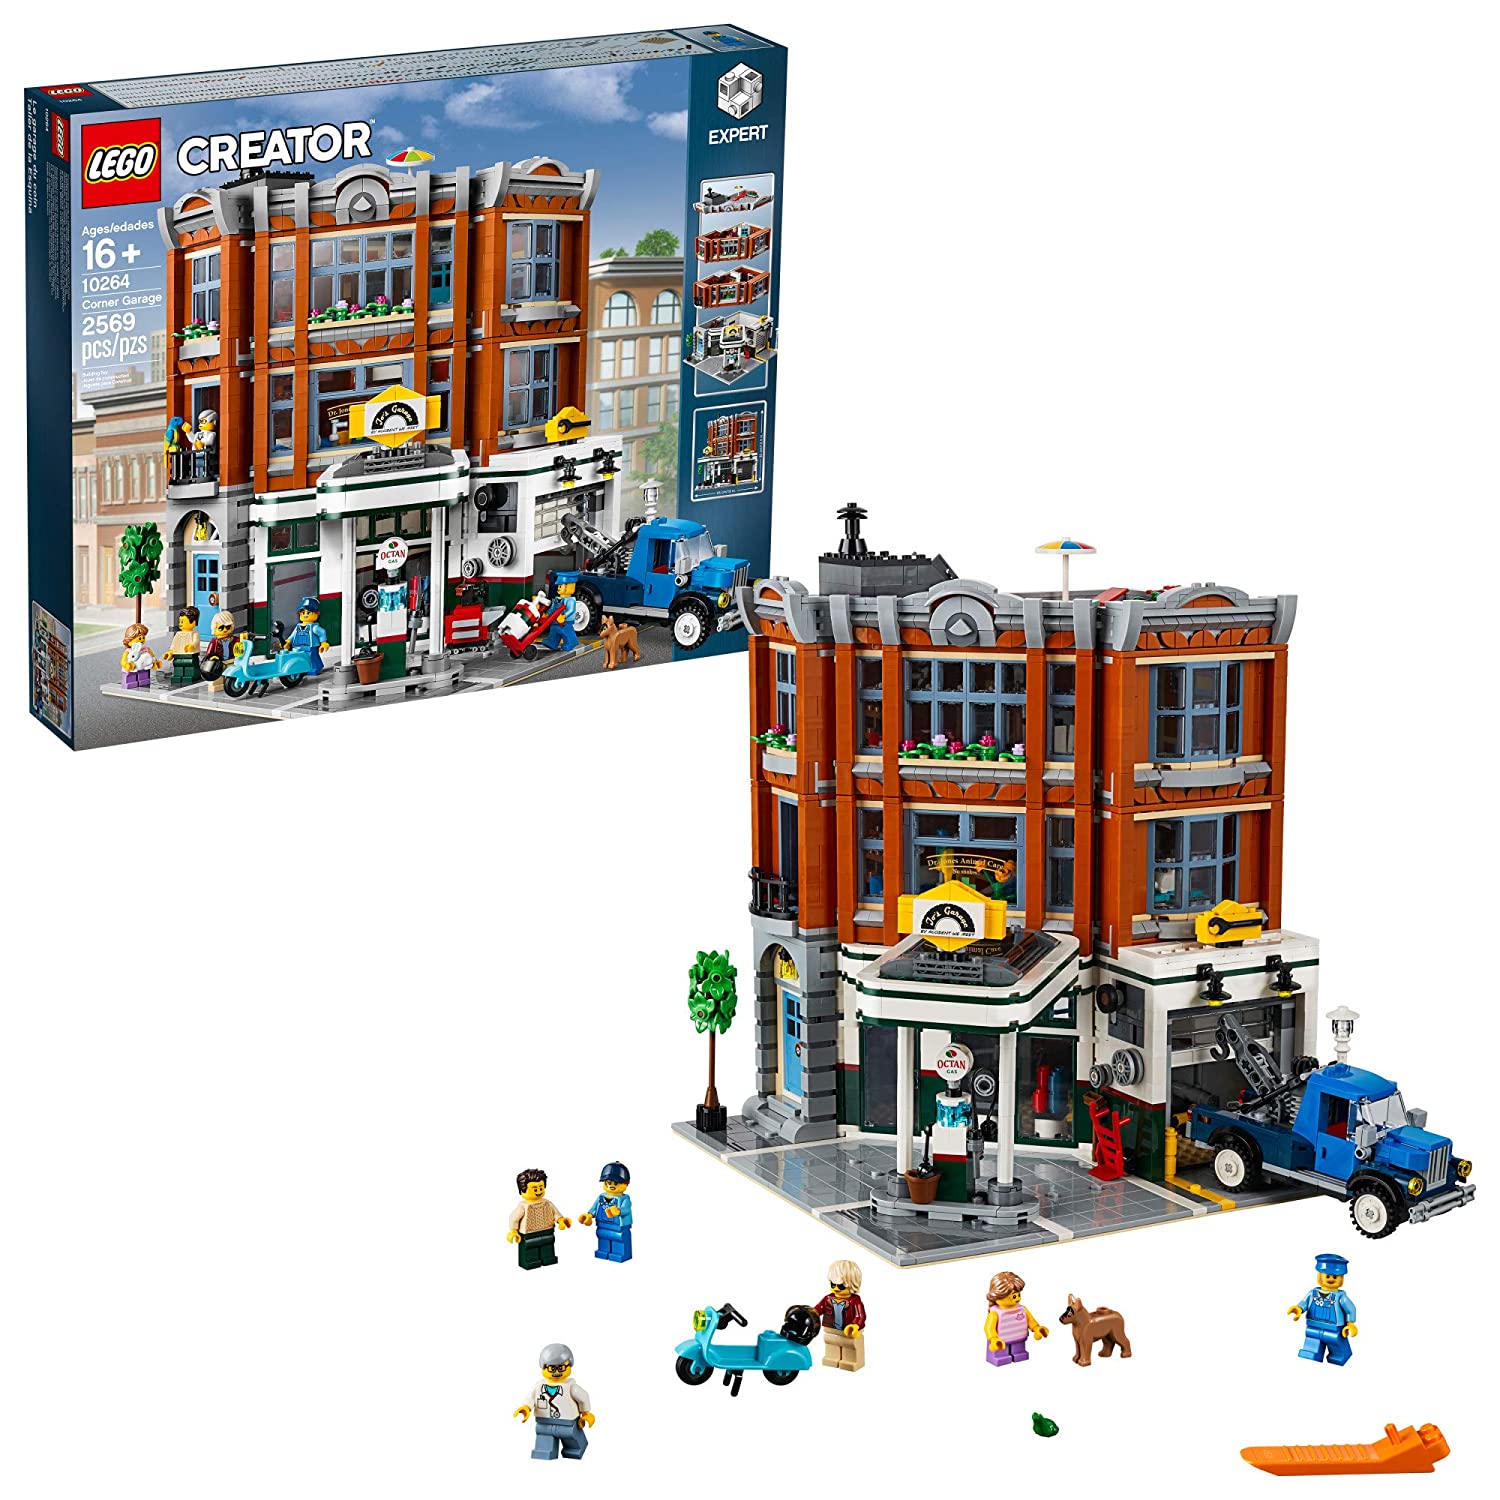 9 Best LEGO Modular Buildings Set 2022 - Buying Guide 2